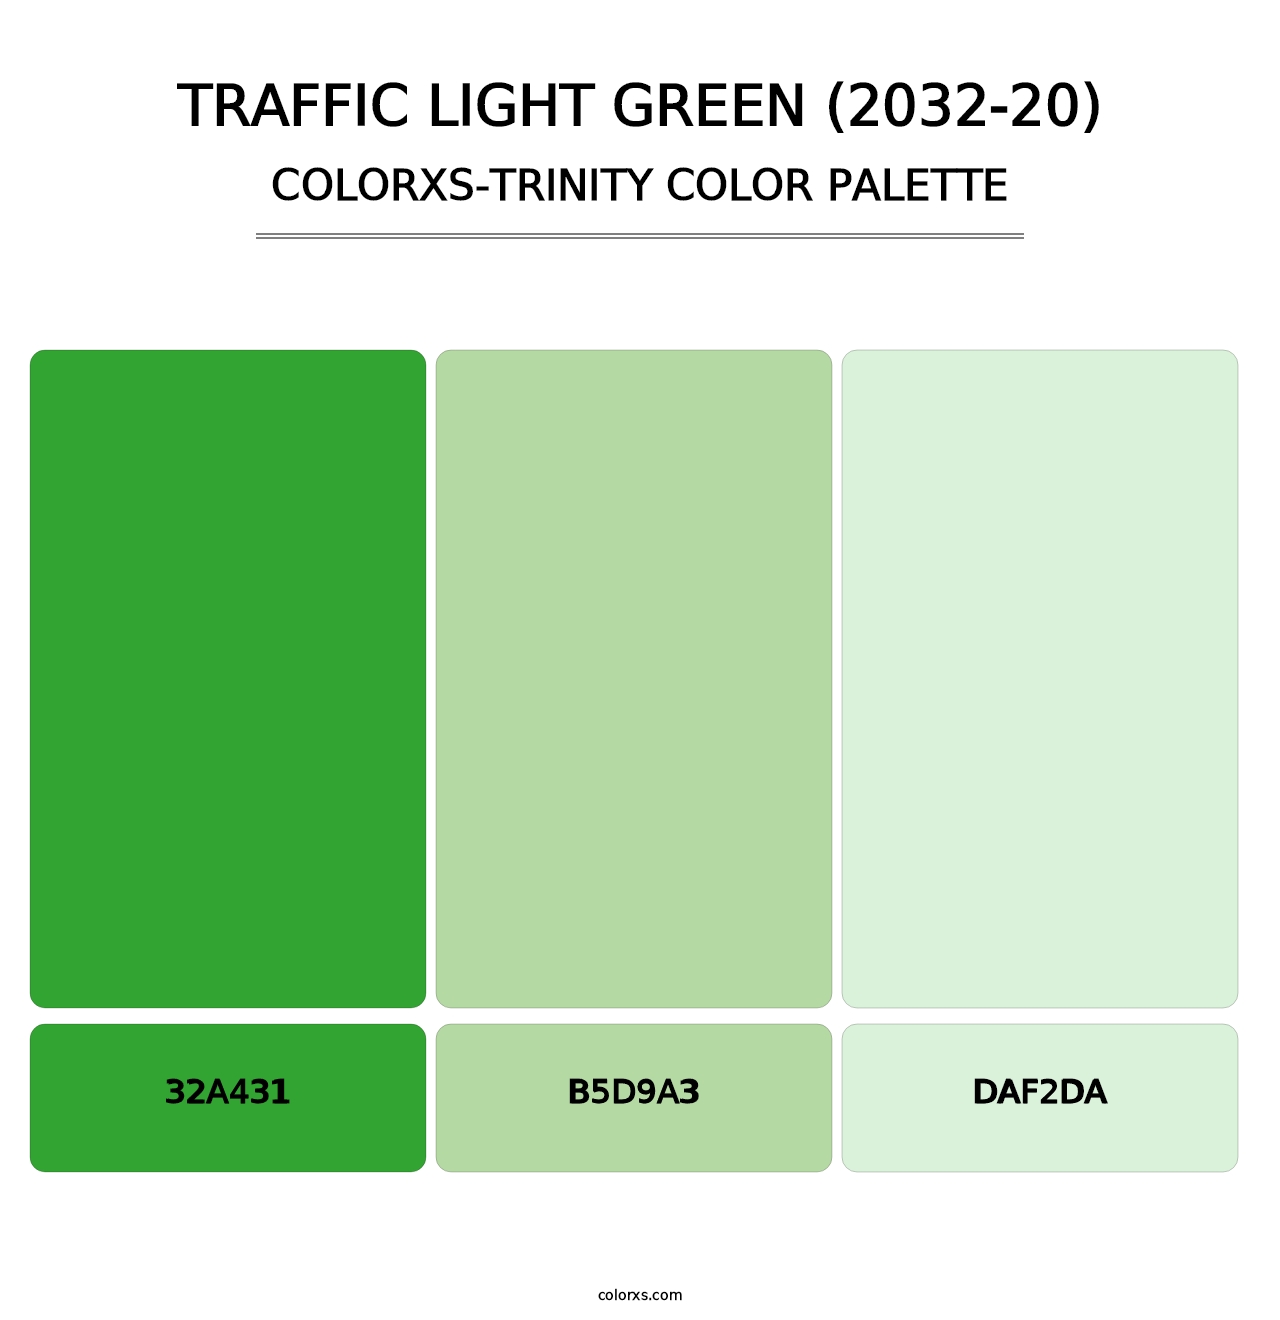 Traffic Light Green (2032-20) - Colorxs Trinity Palette